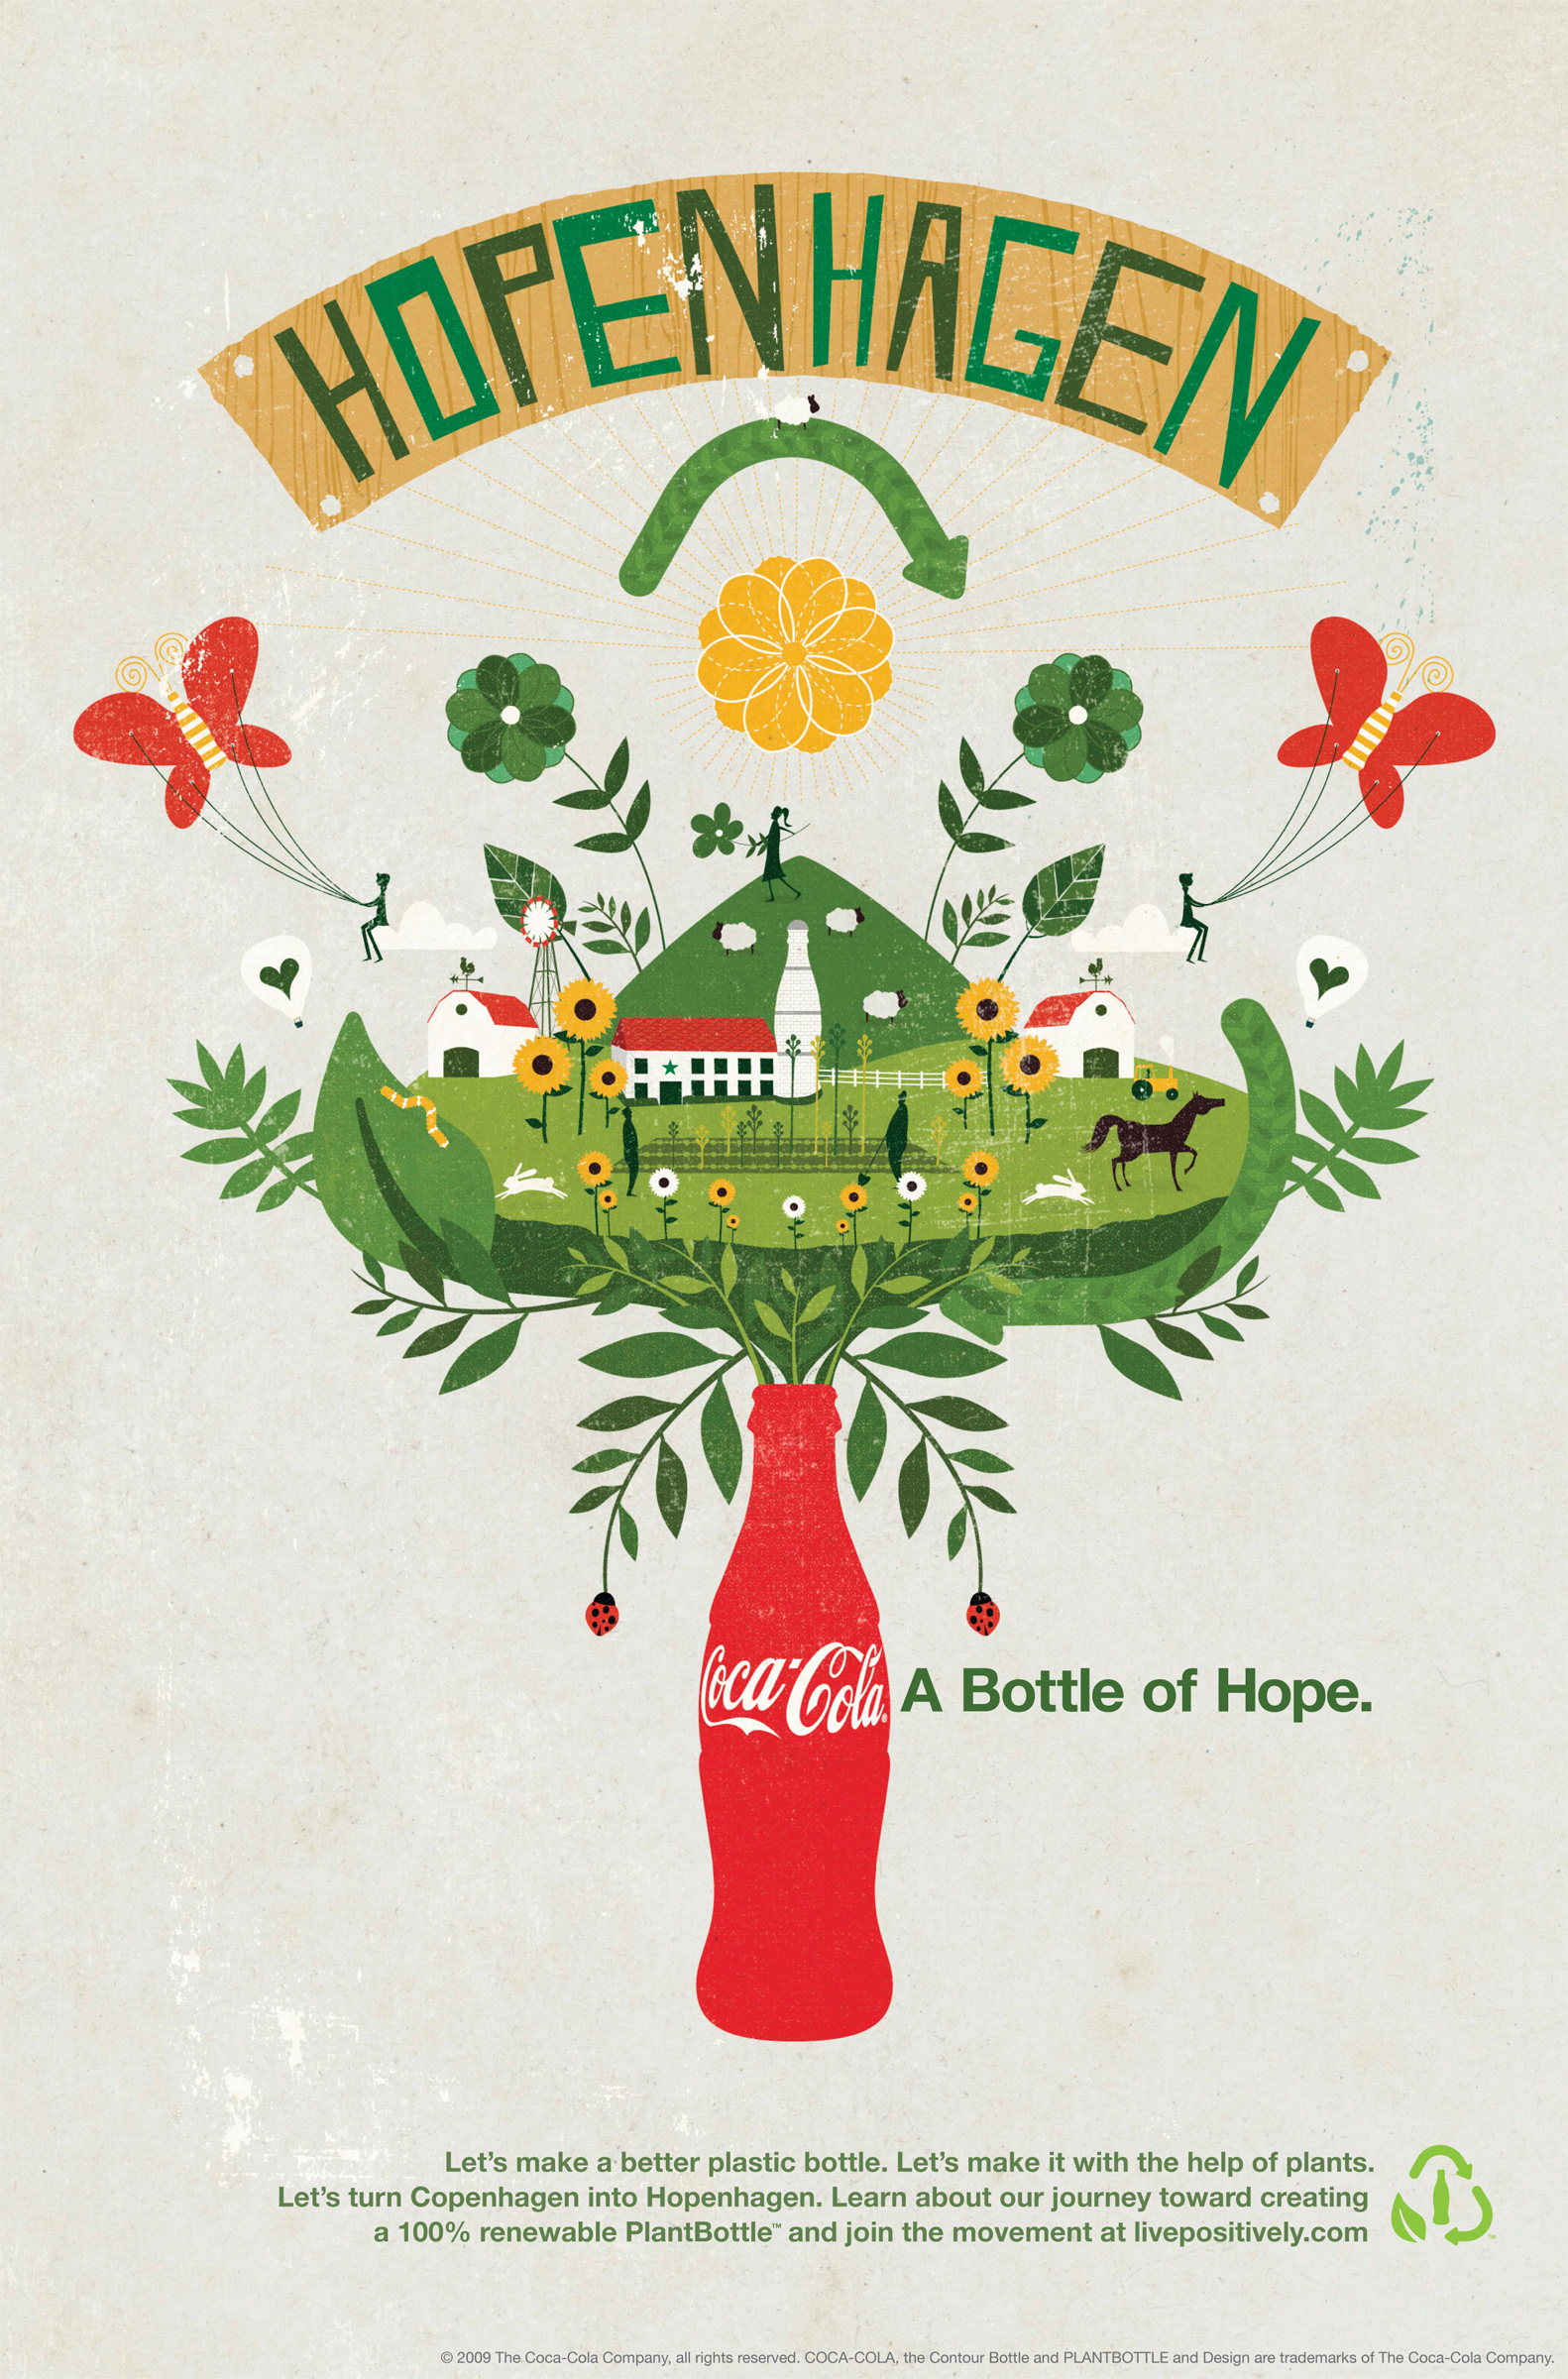 A Bottle of Hope